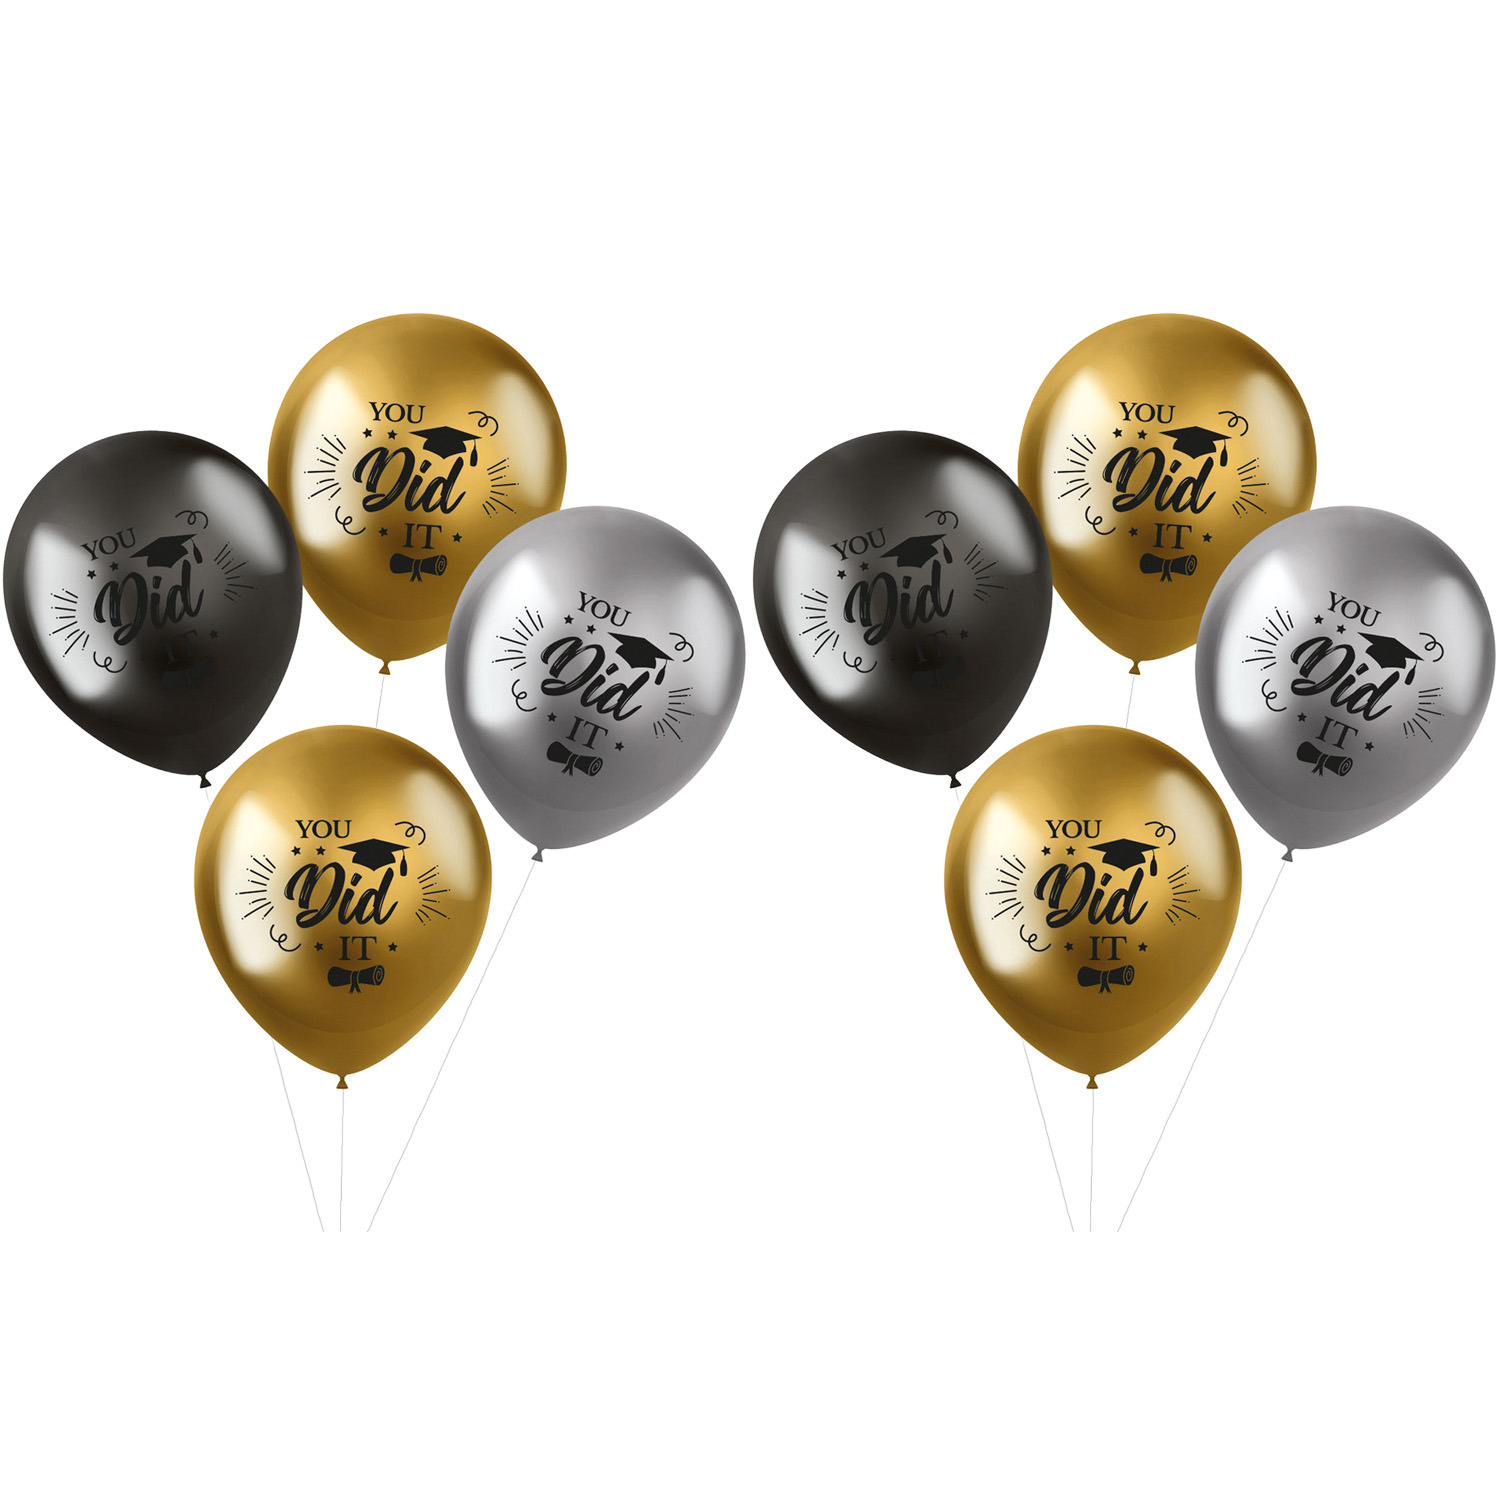 Ballonnen geslaagd thema - 20x - goud/zilver/grijs - latex - 33 cm - diploma examenfeest versiering